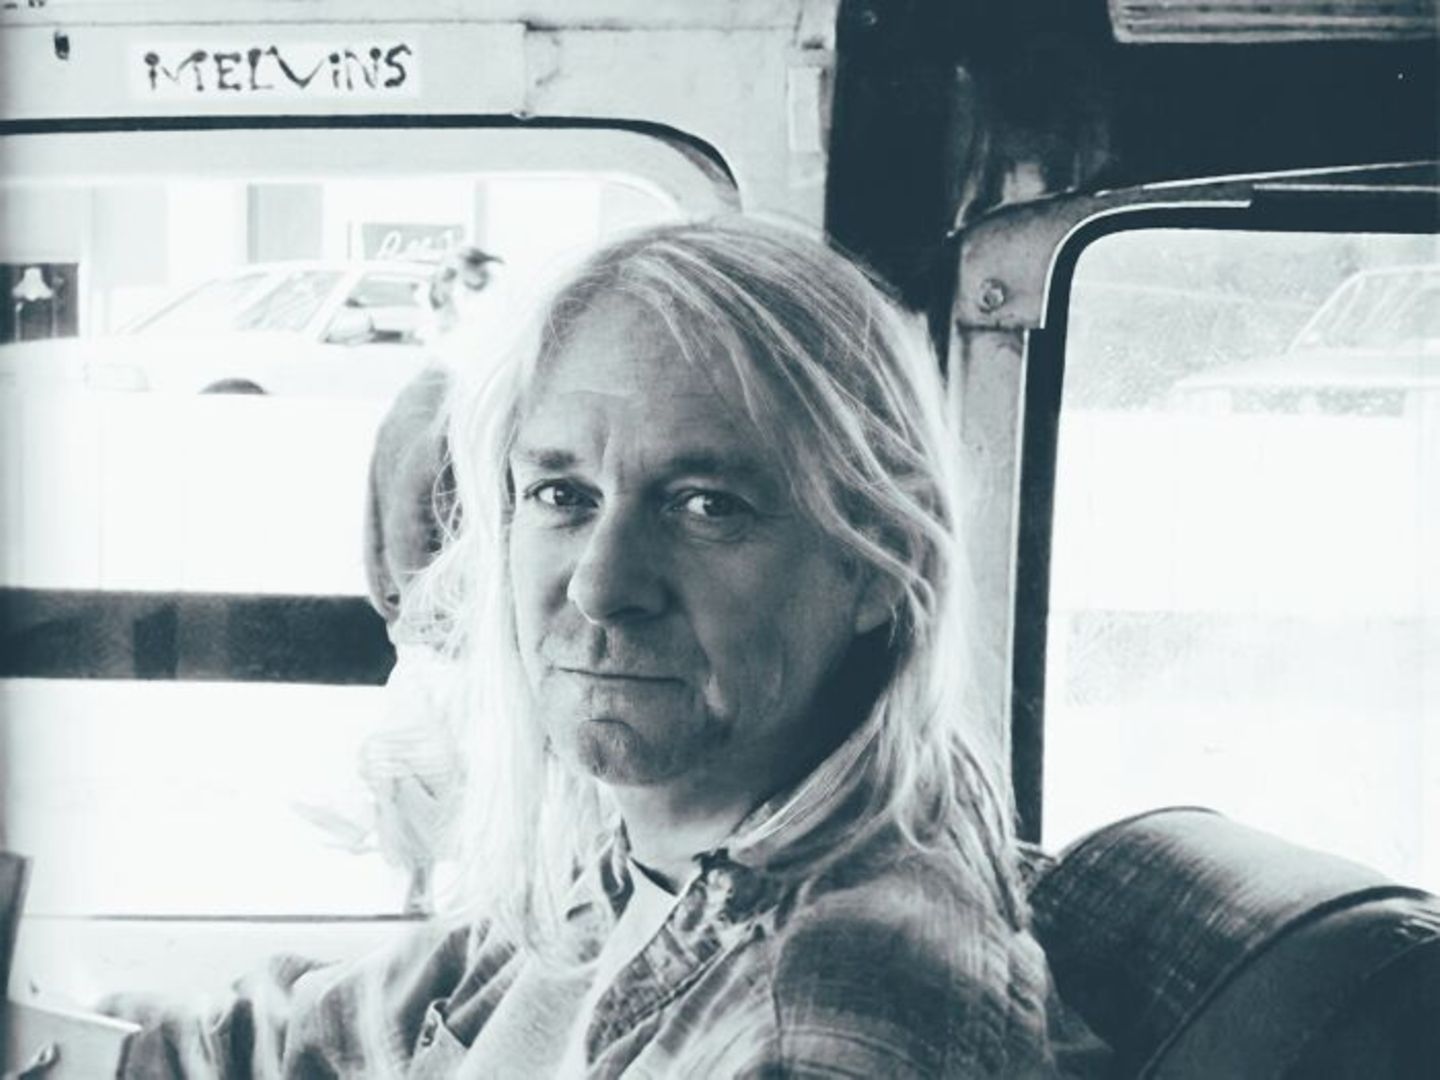 Fotoprojekt “As If Nothing Happened”: Kurt Cobain